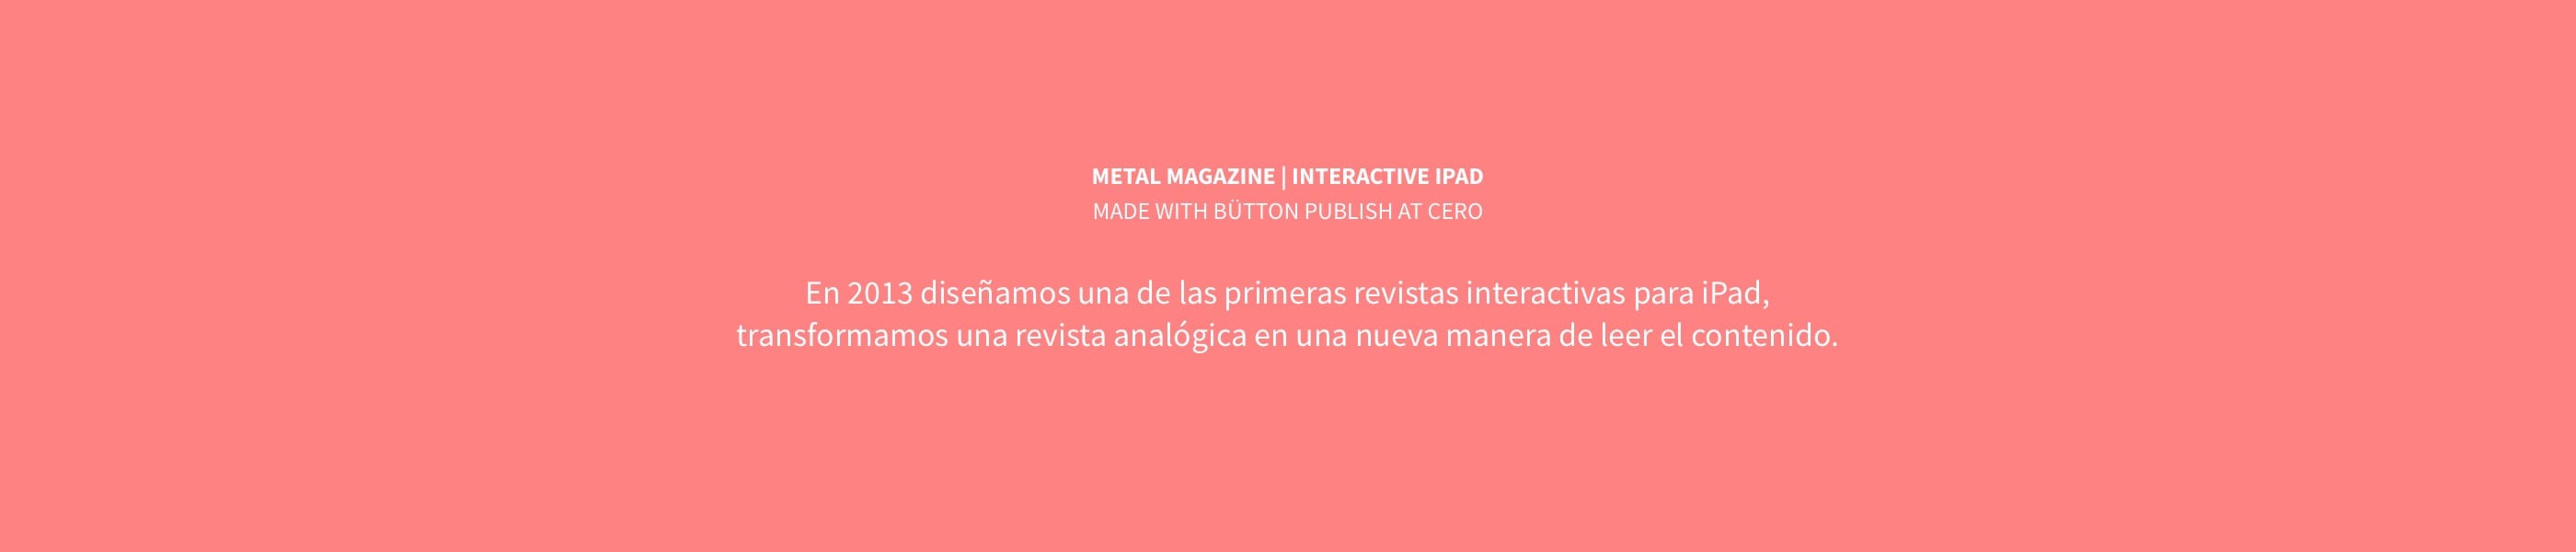 Metal interactive magazine